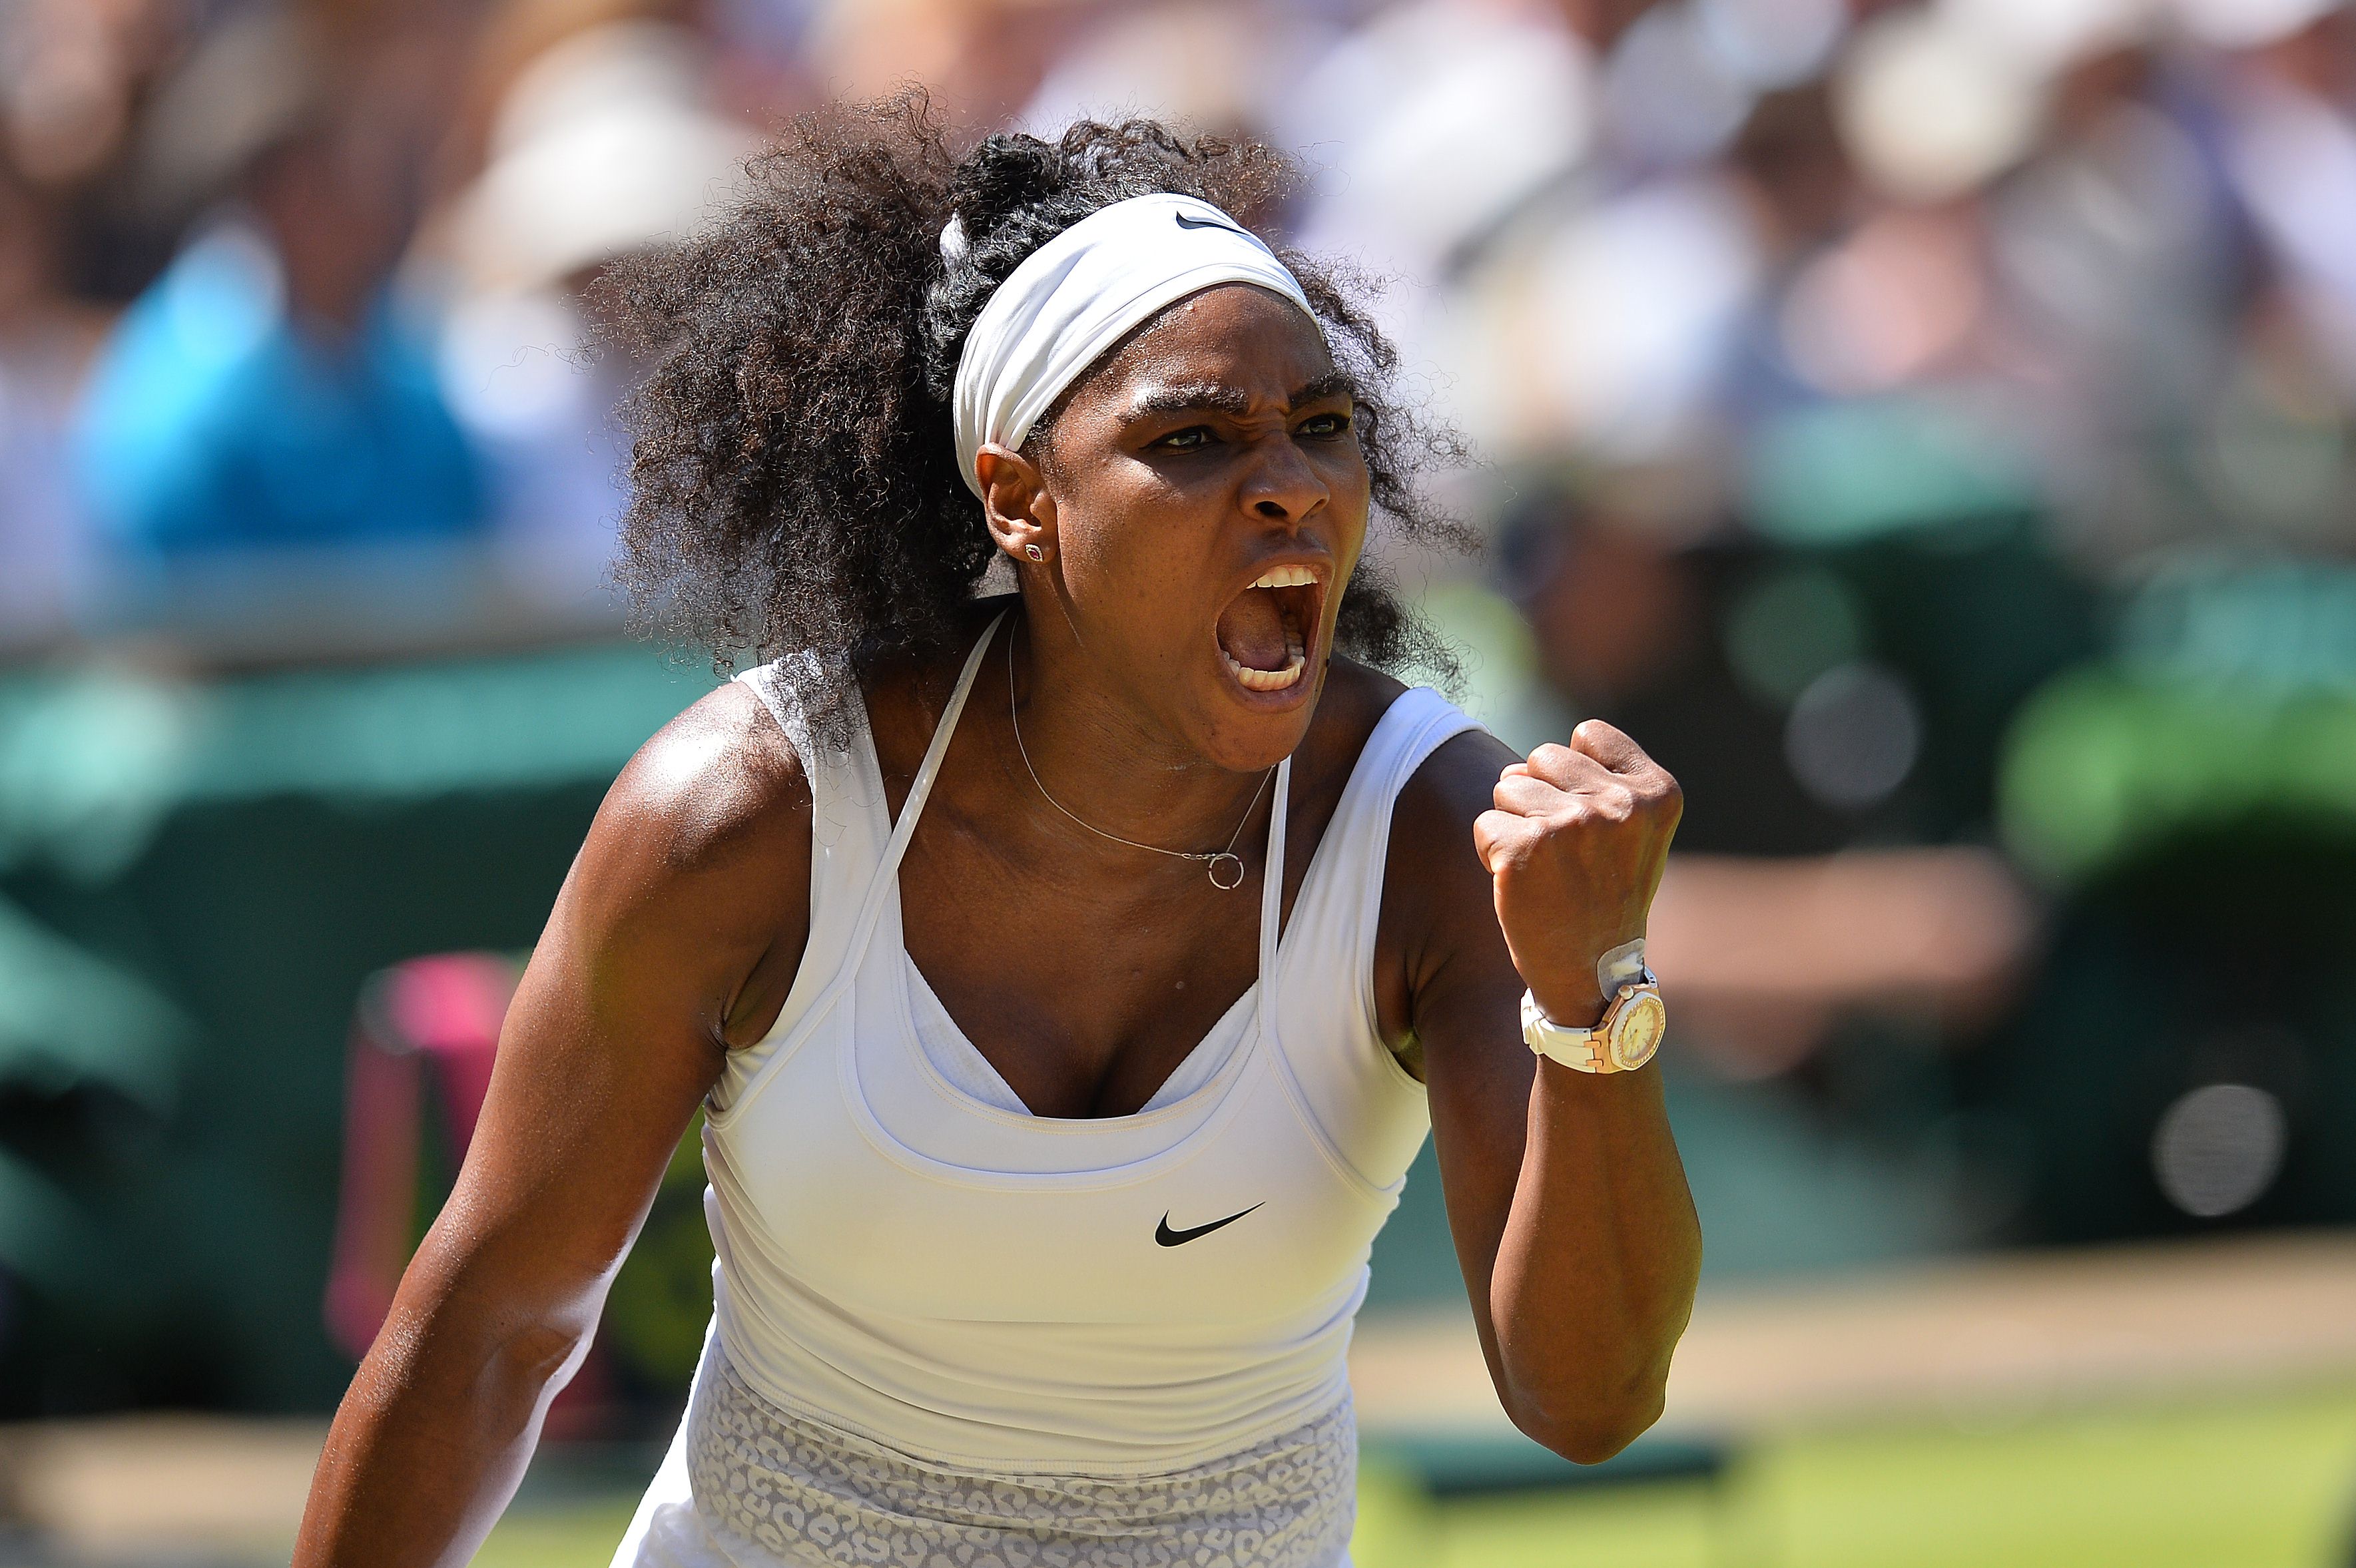 Serena Williams wins Wimbledon, her third major title in 2015 13newsnow